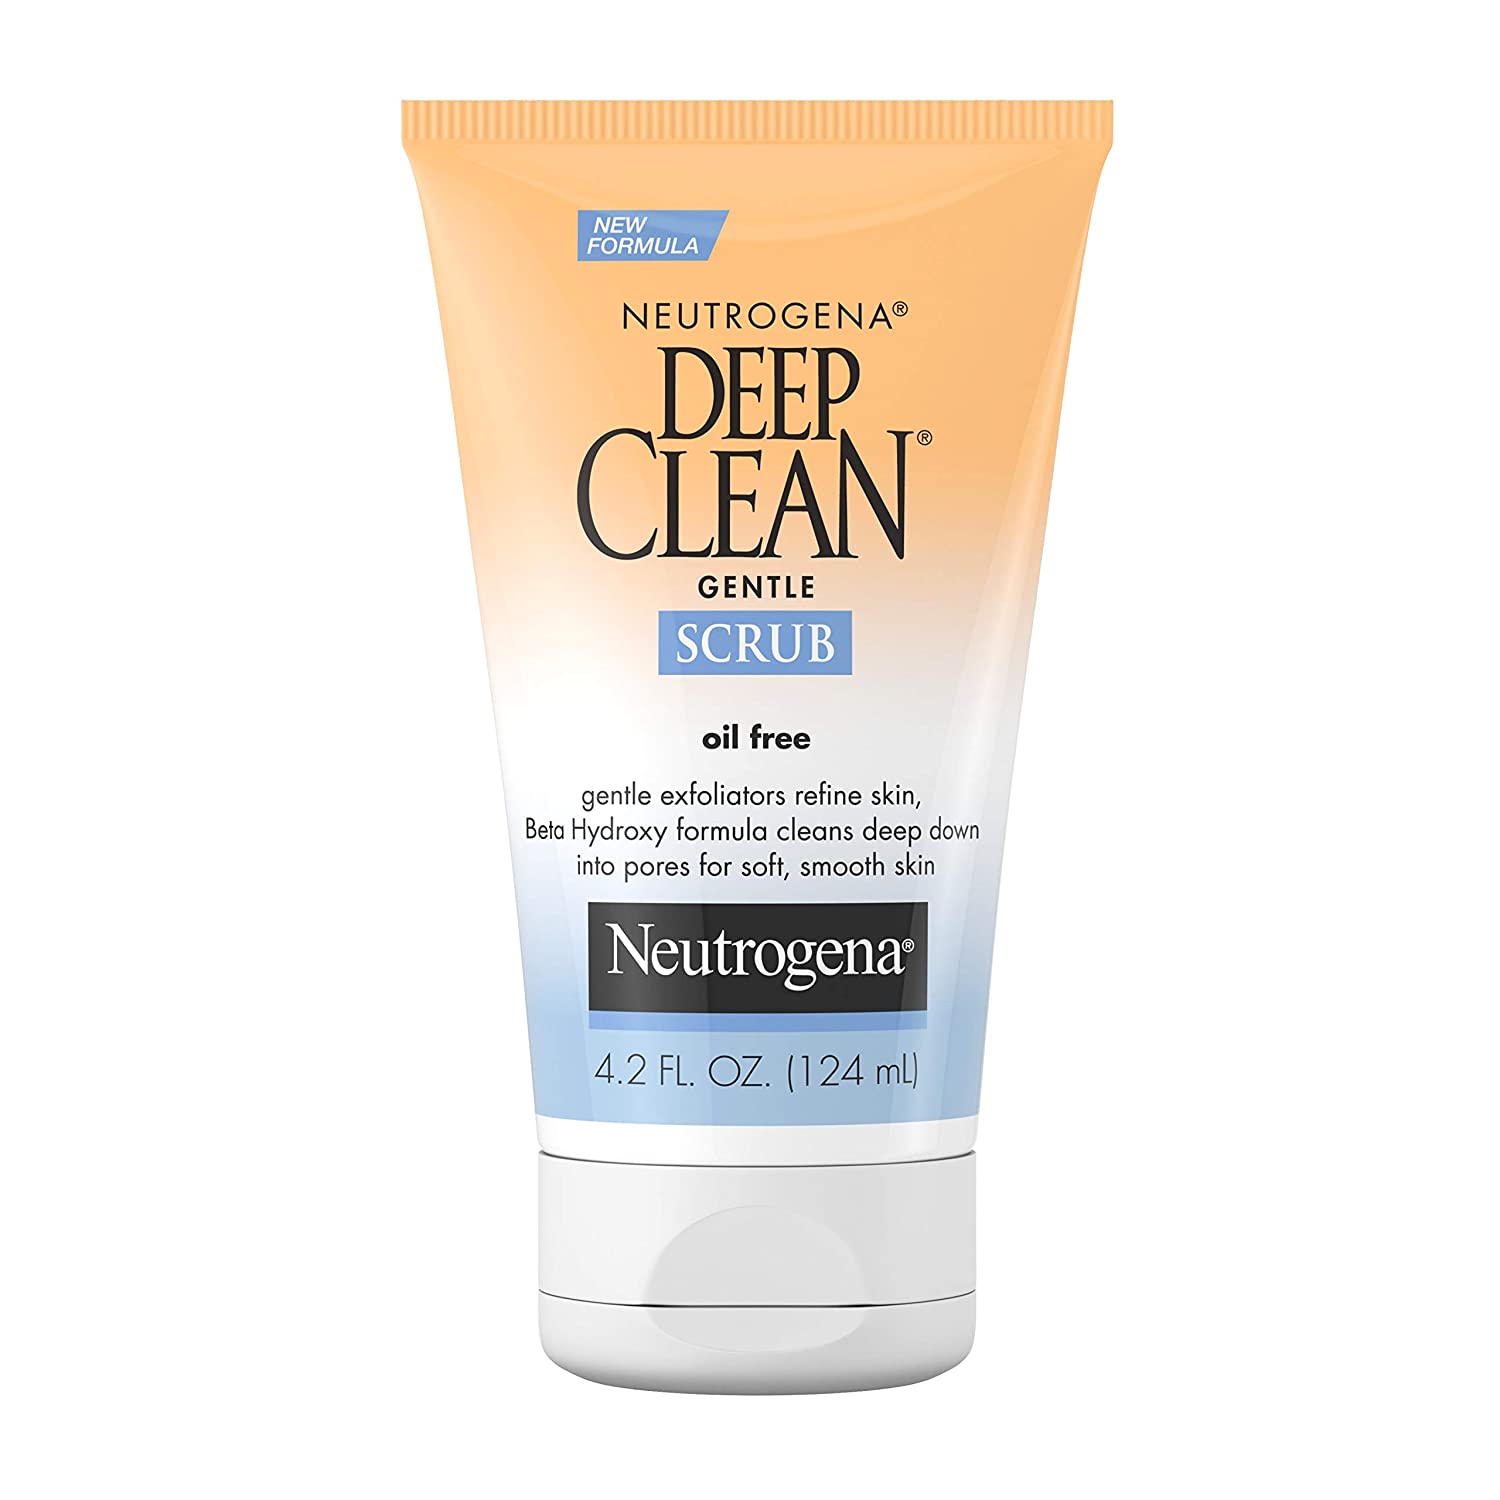 Neutrogena Deep Clean Gentle Daily Facial Scrub